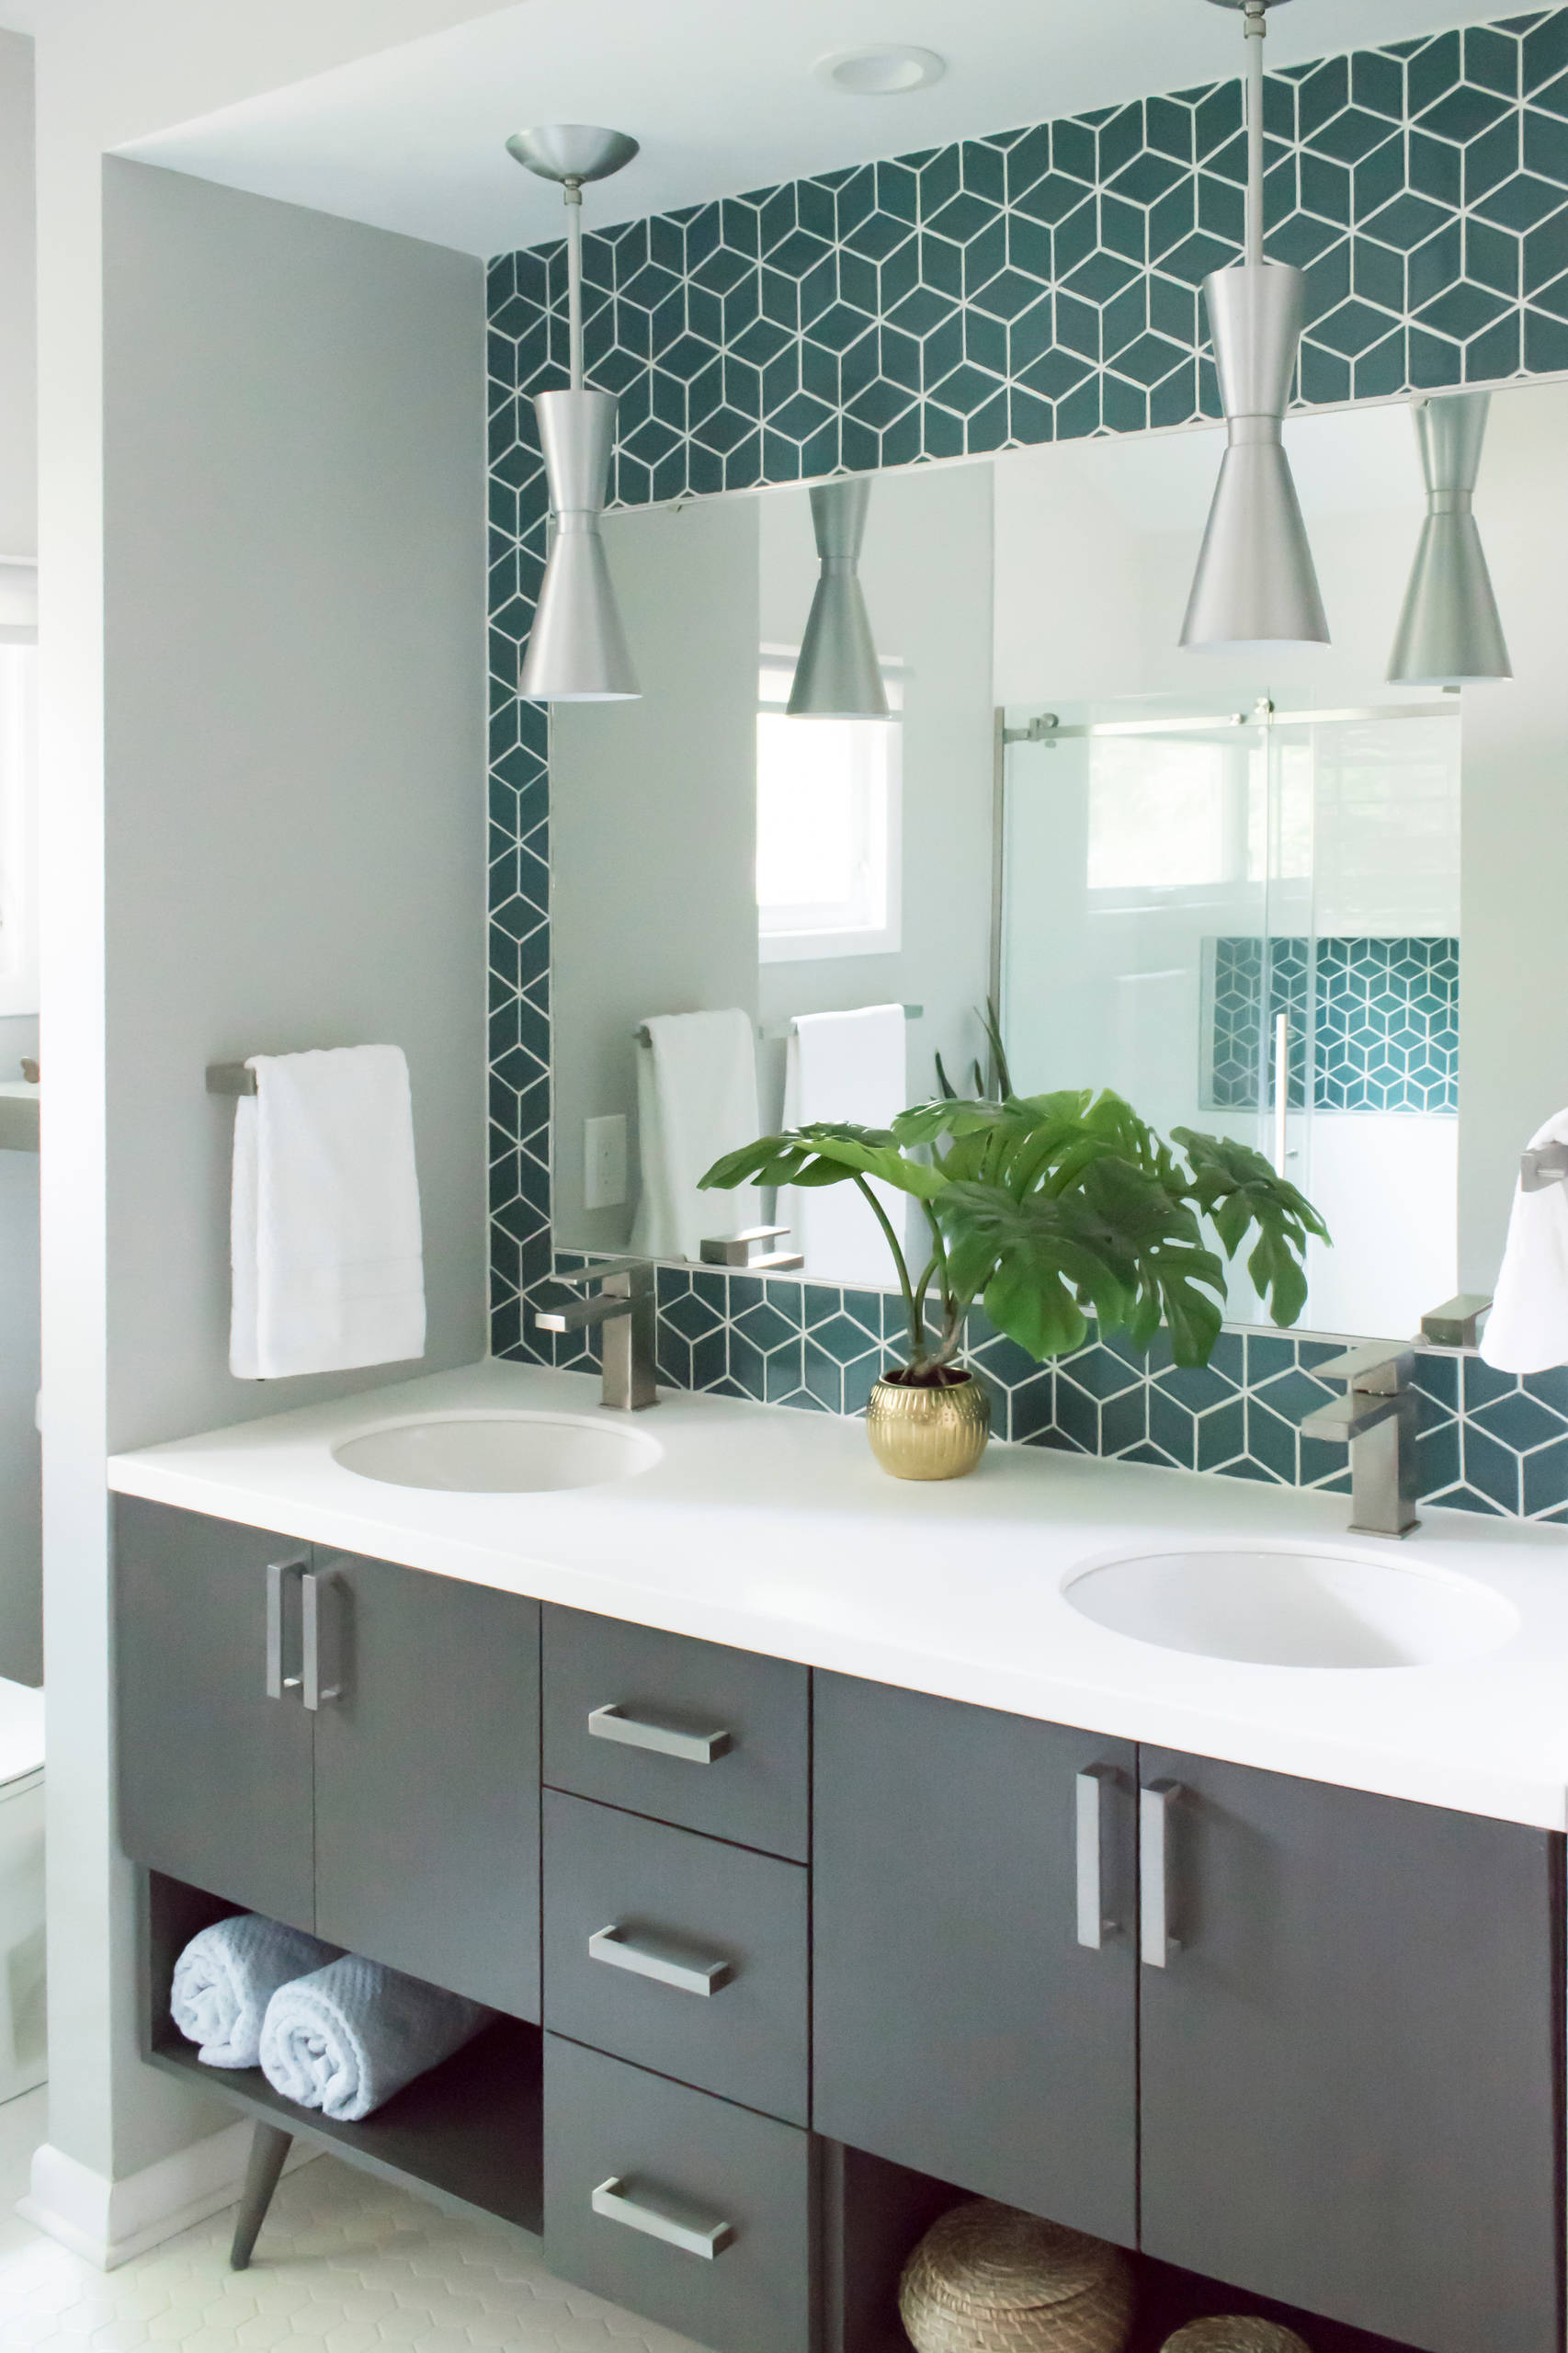 75 Beautiful Mid Century Modern Green Tile Bathroom Pictures Ideas September 2021 Houzz